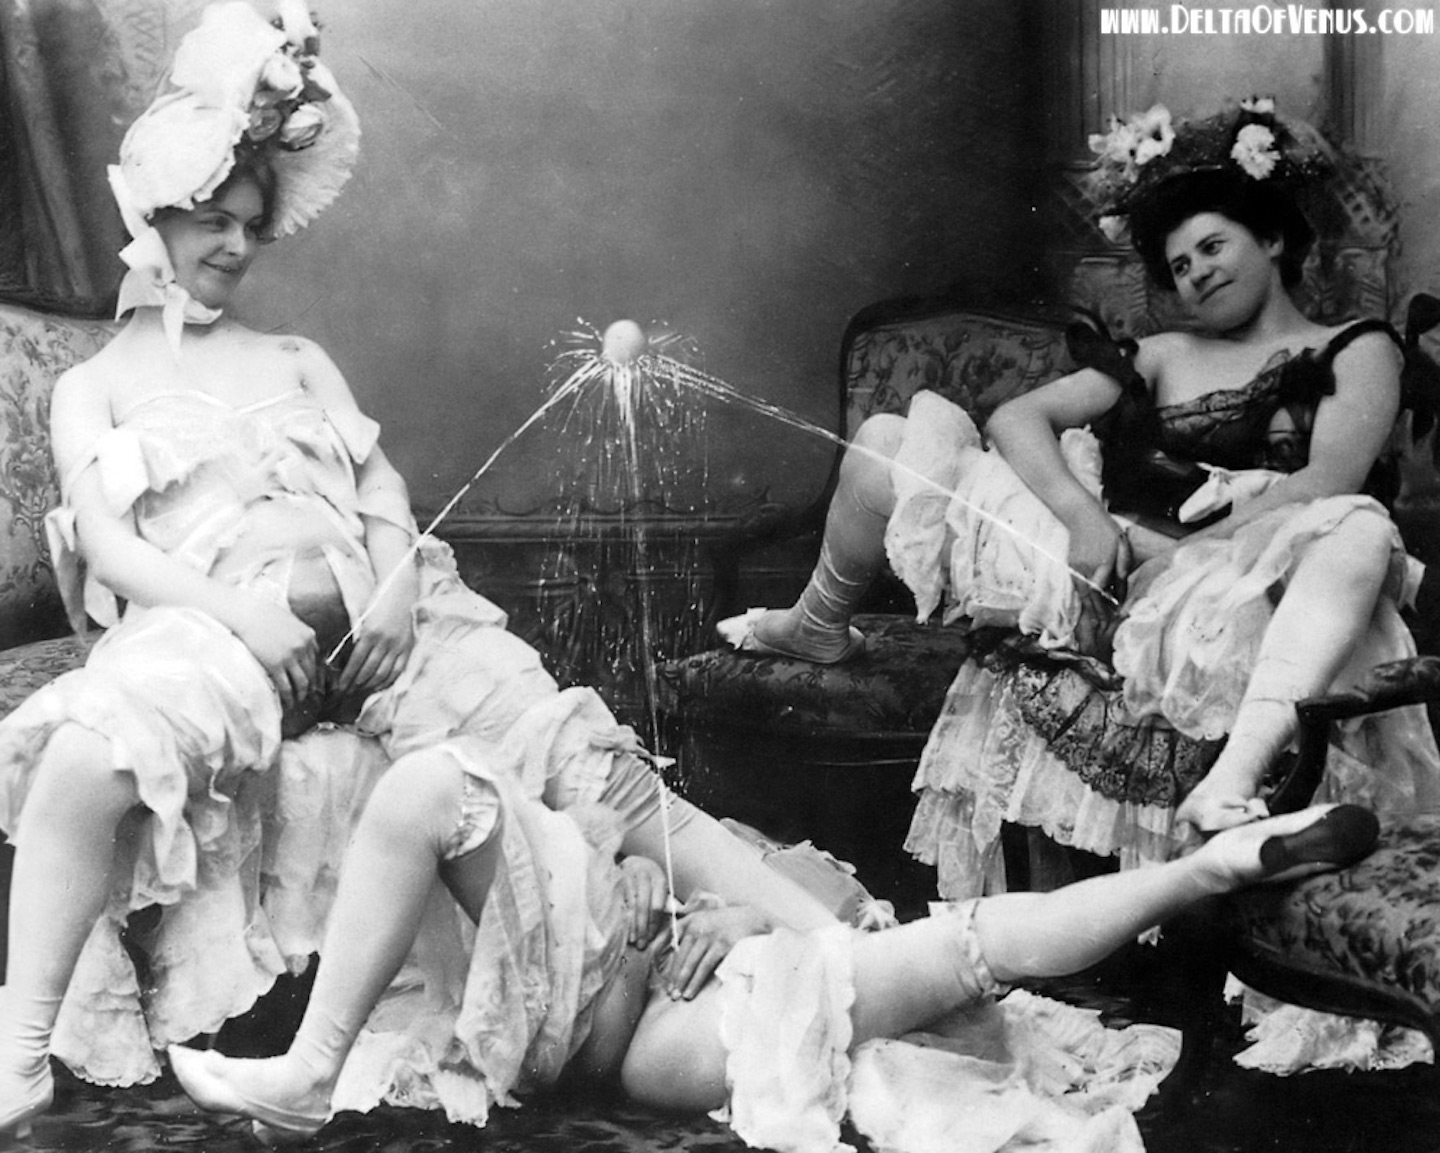 1800s Vintage Porno - The Unbridled Joy of Victorian Porn - VICE